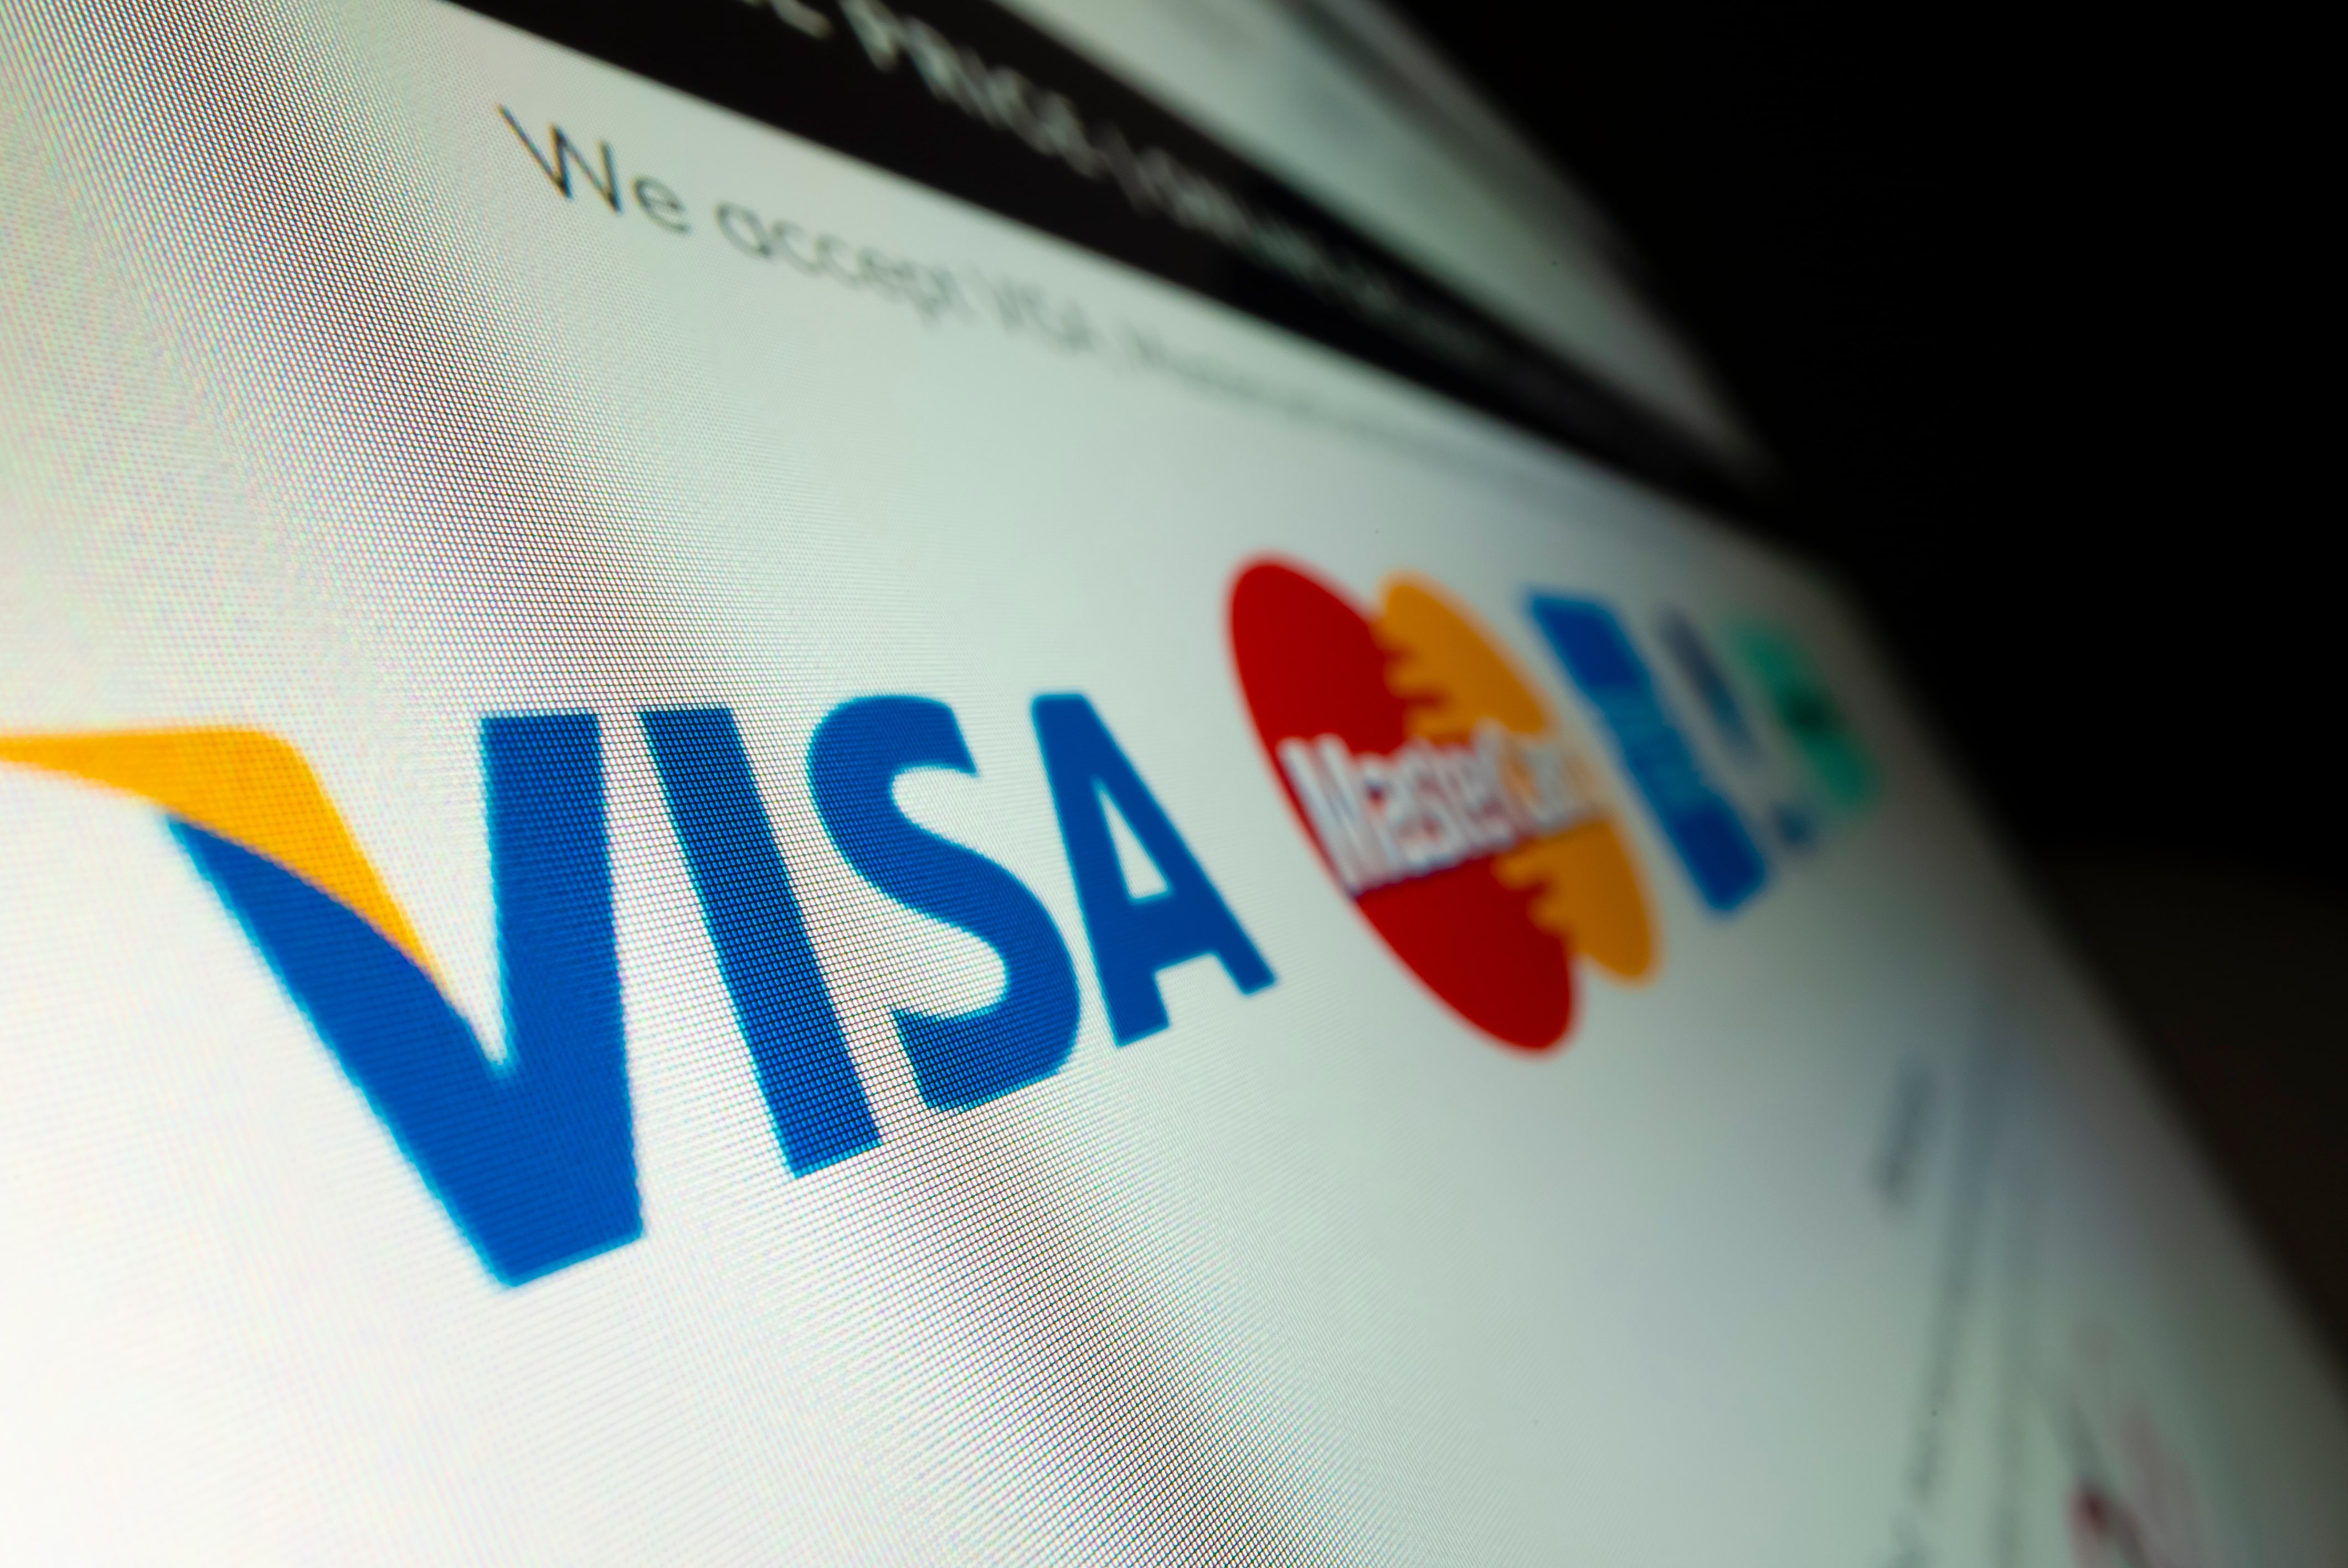 Close-up view of Visa logo